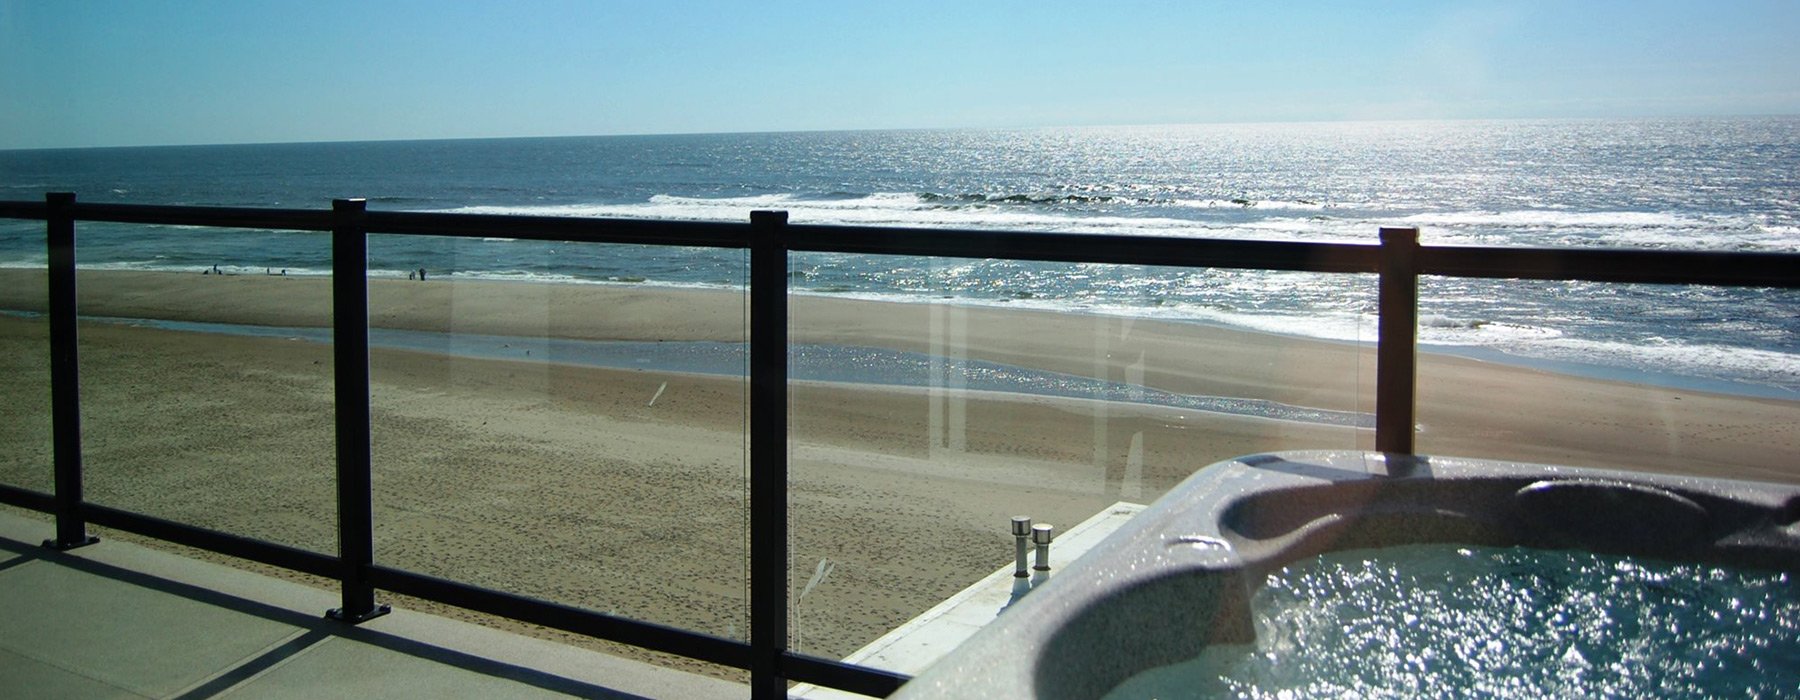 hot tub on balcony overlooking ocean